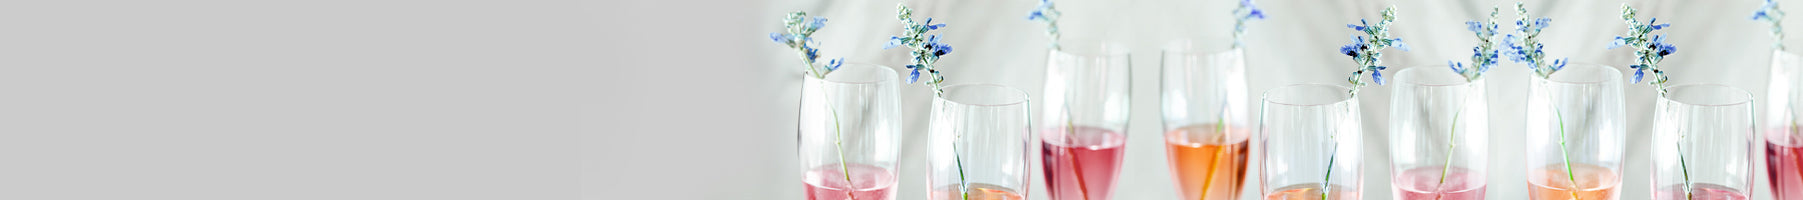 Banner_Tableware_Drinkware_Champagne-Glasses_248